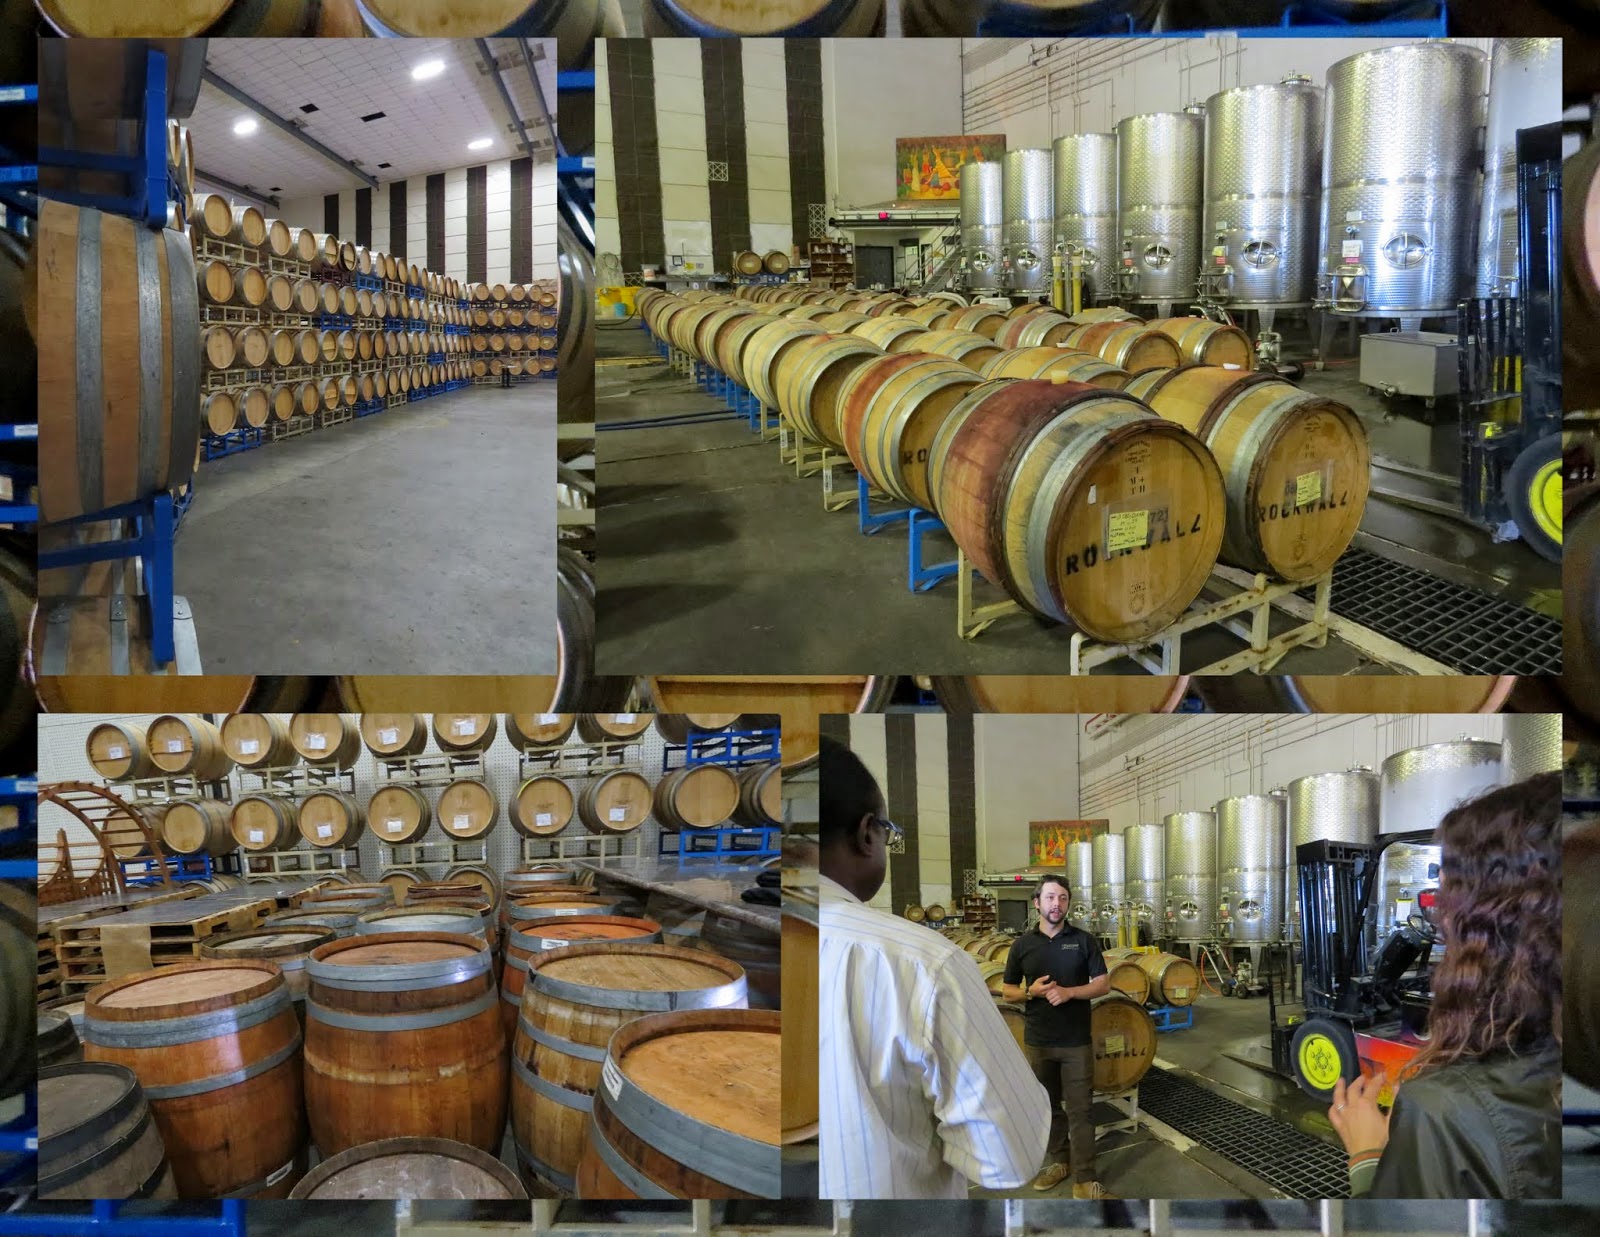 Barrel Room at Rock Wall Winery